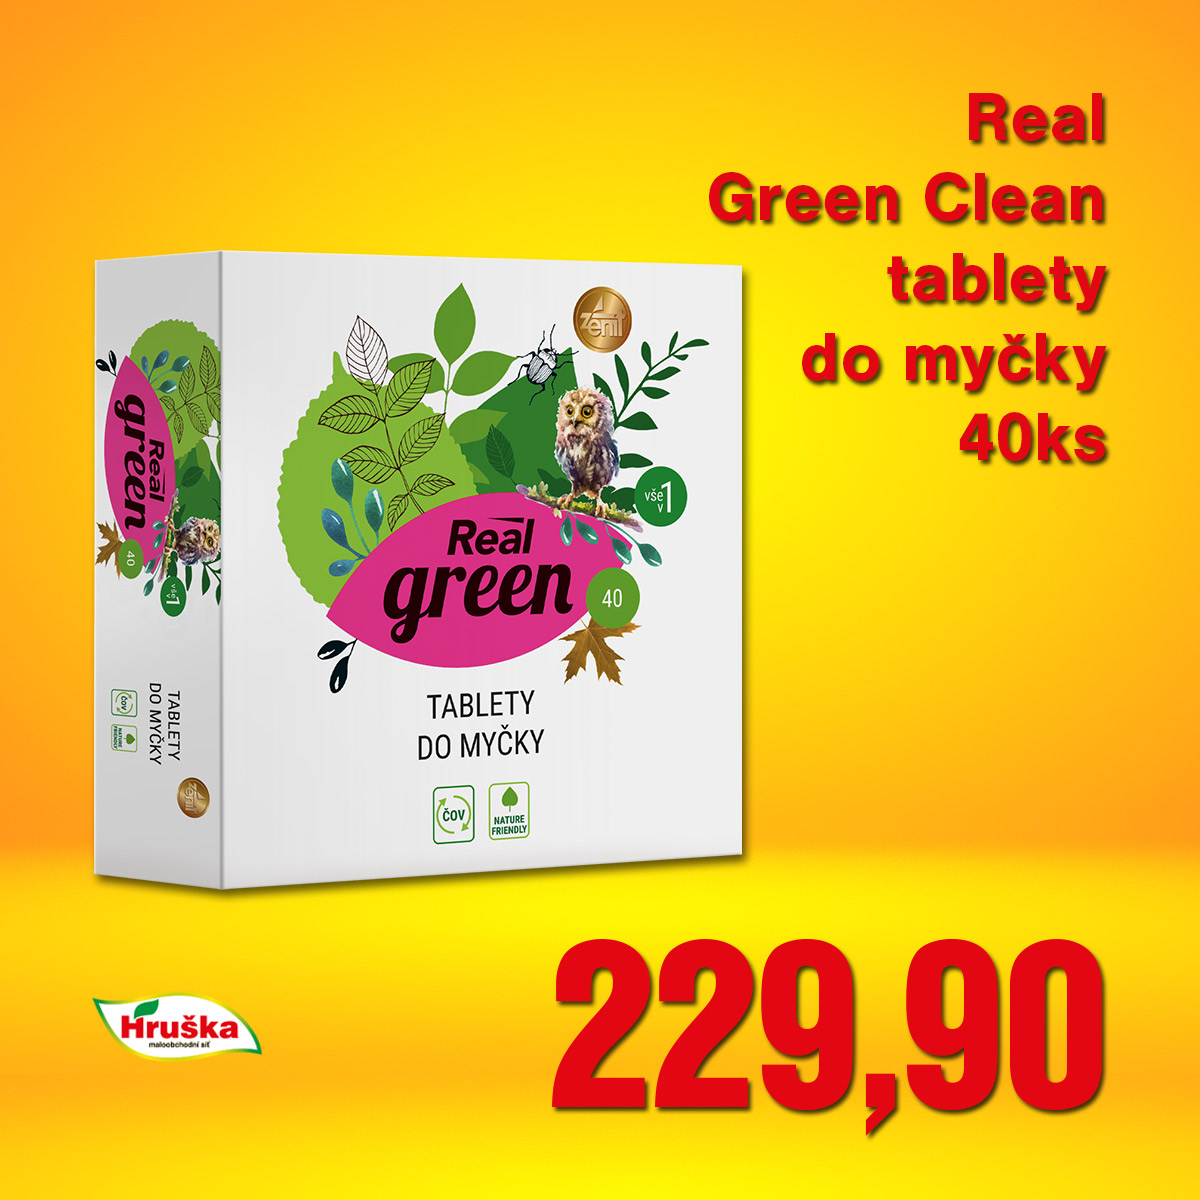 Real Green Clean tablety do myčky 40ks